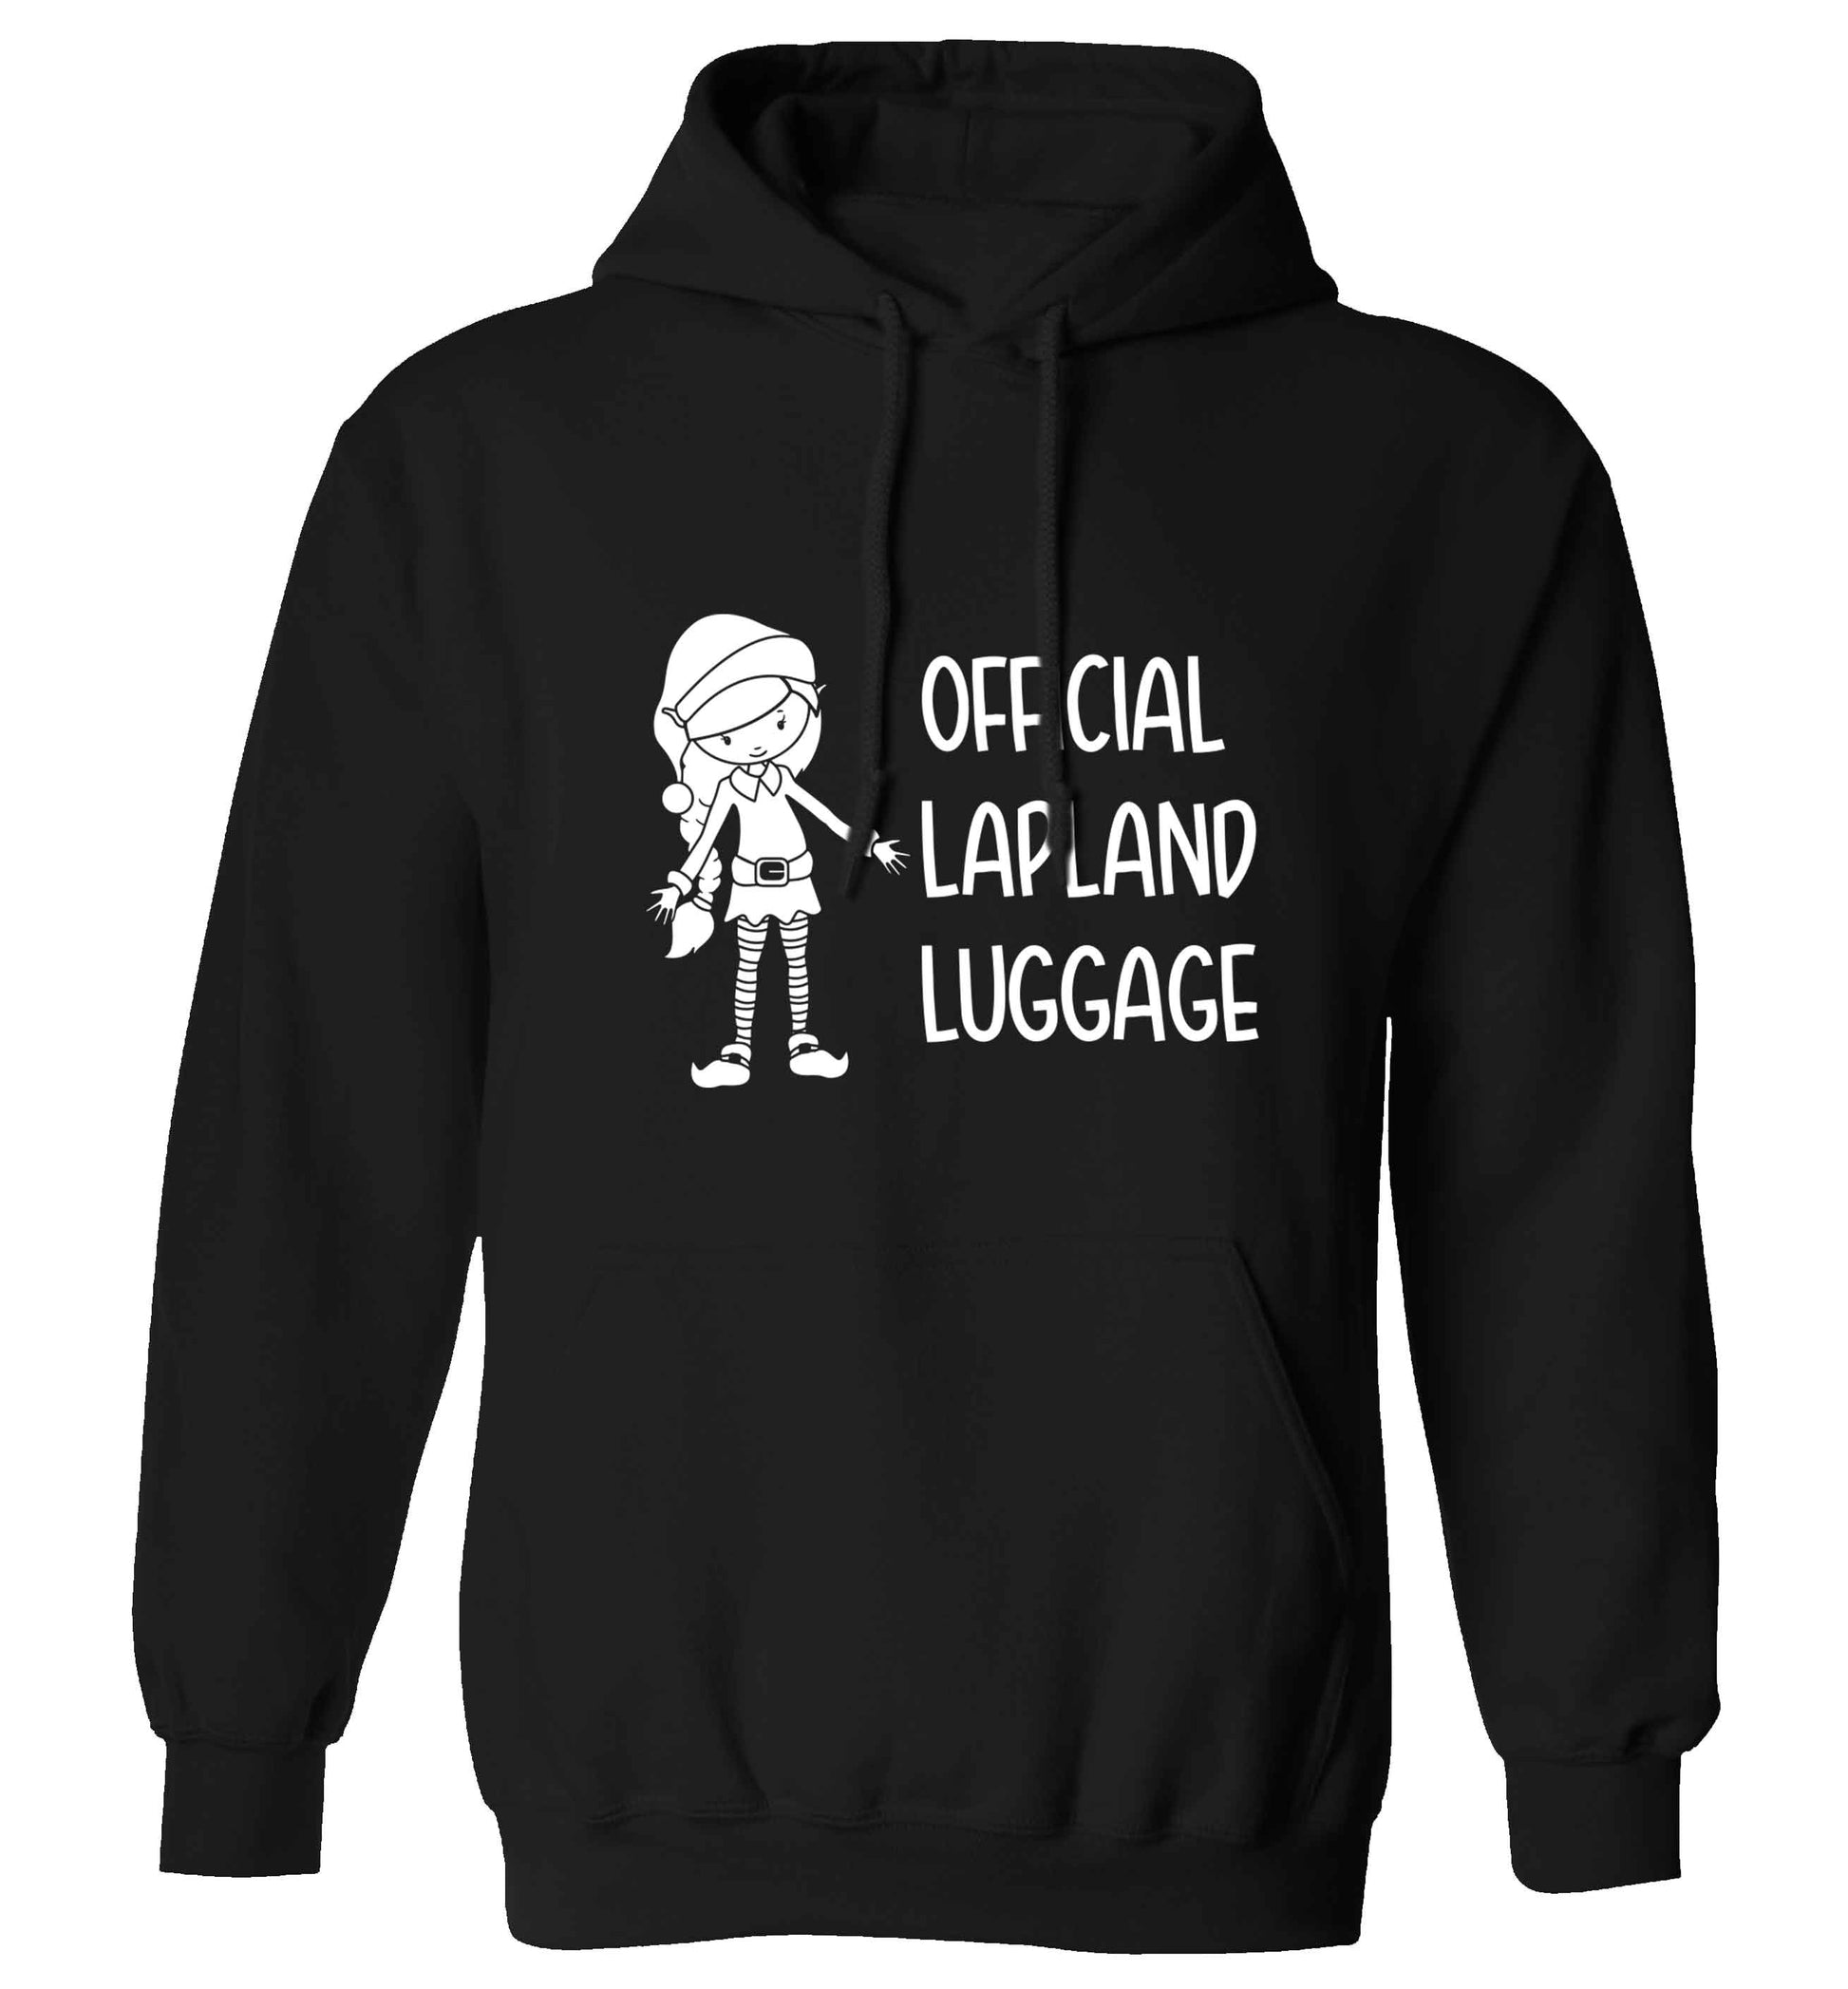 Official lapland luggage - Elf snowflake adults unisex black hoodie 2XL